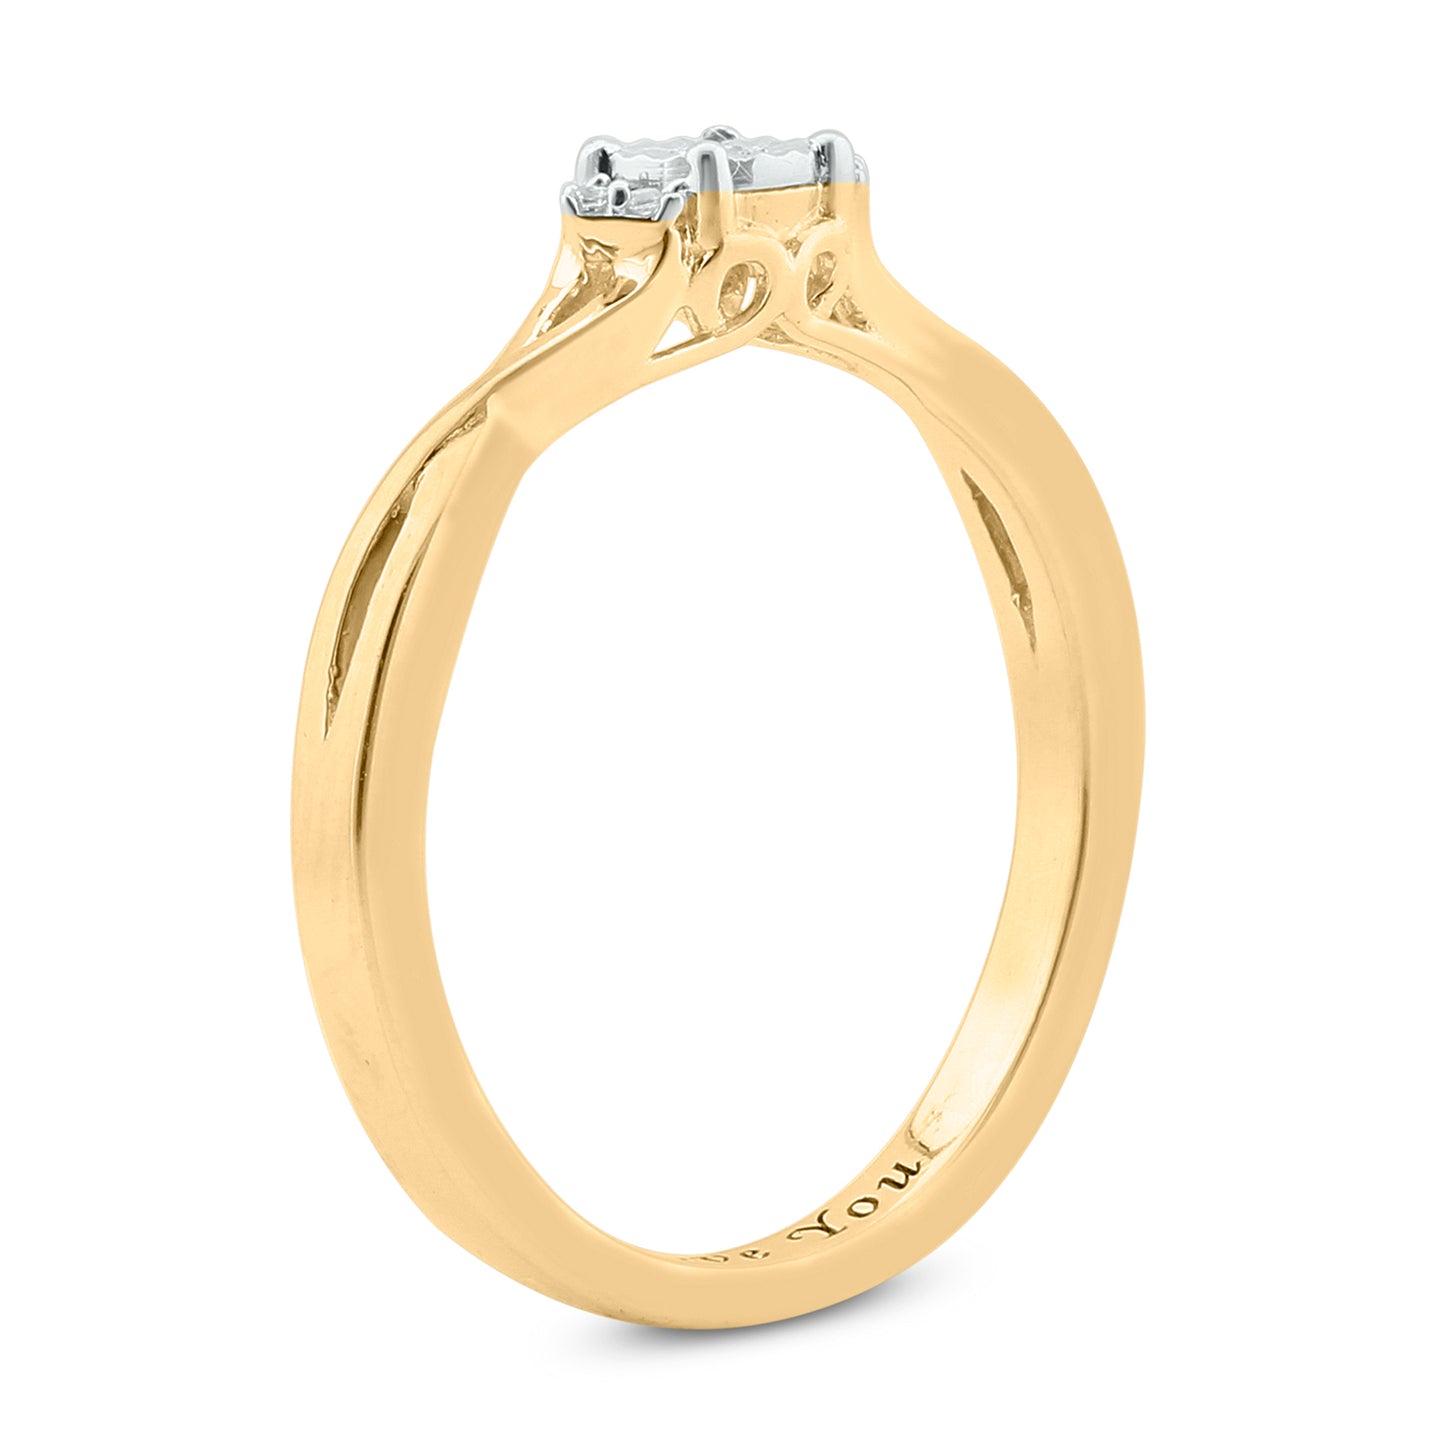 10K Gold I Love You Engraved Promise Ring